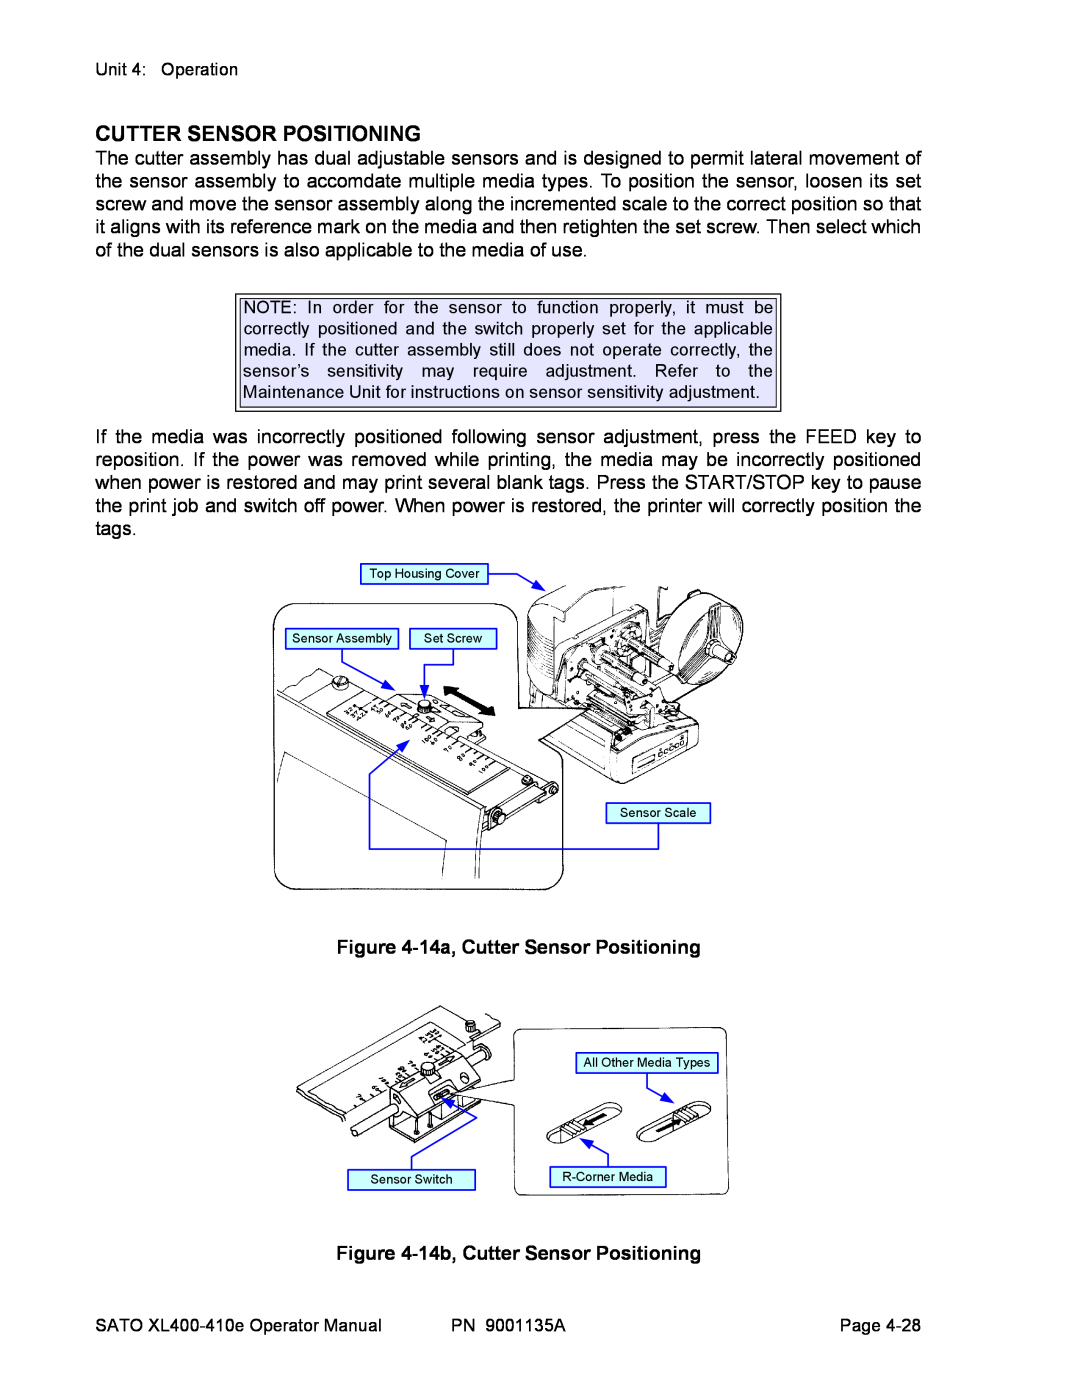 SATO 410e, 400e manual 14a, Cutter Sensor Positioning, 14b, Cutter Sensor Positioning 